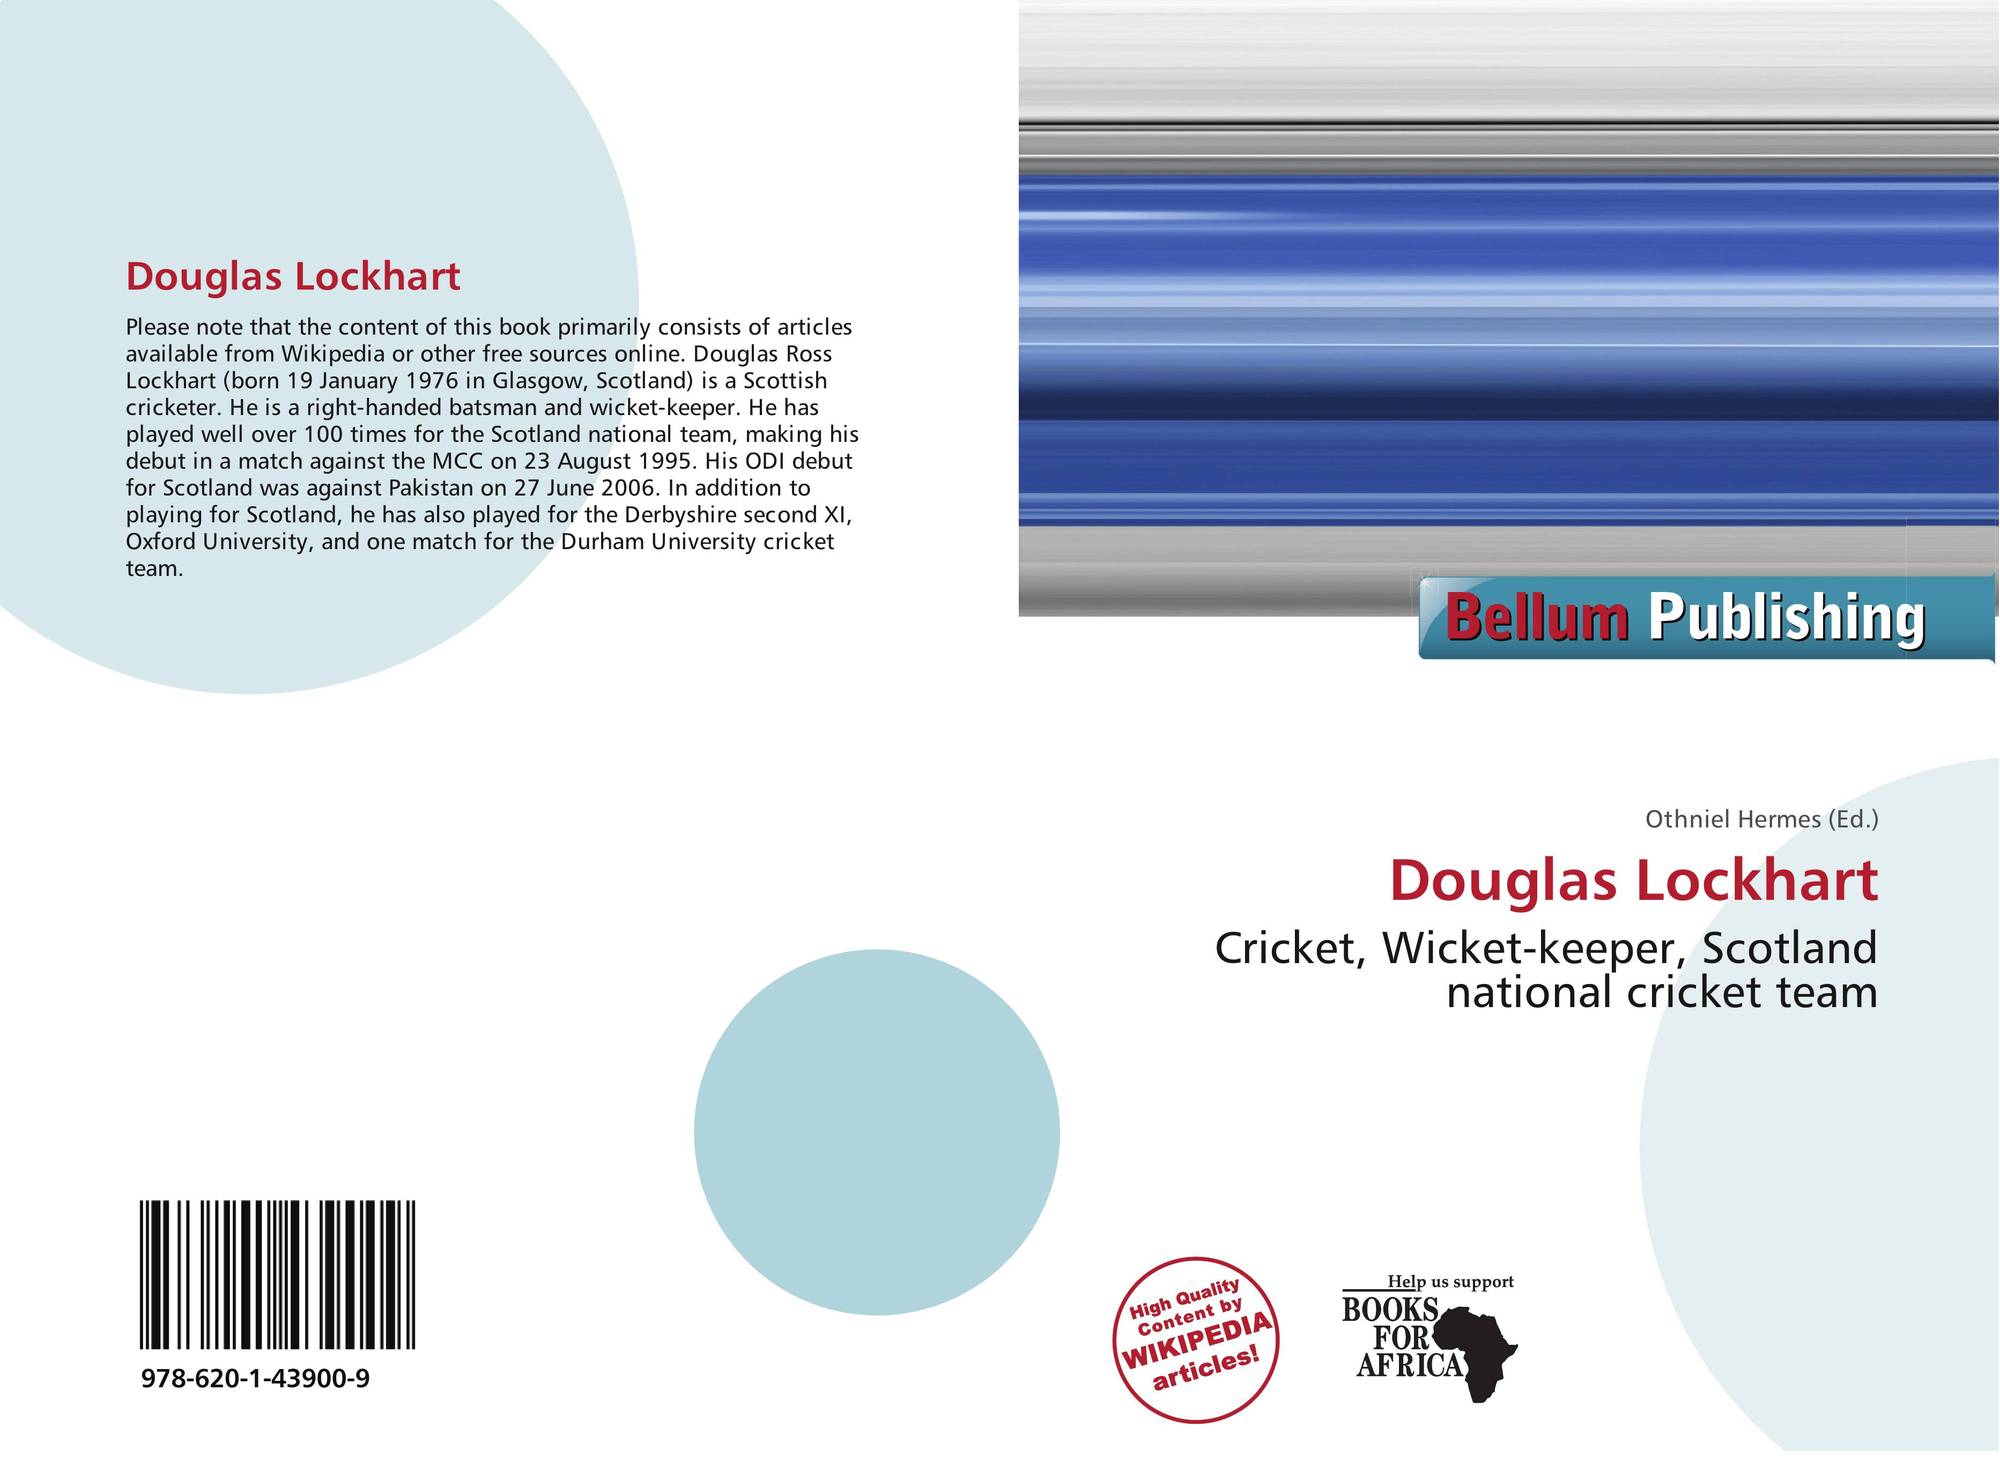 Douglas Lockhart, 978-620-1-43900-9, 6201439005 ,9786201439009